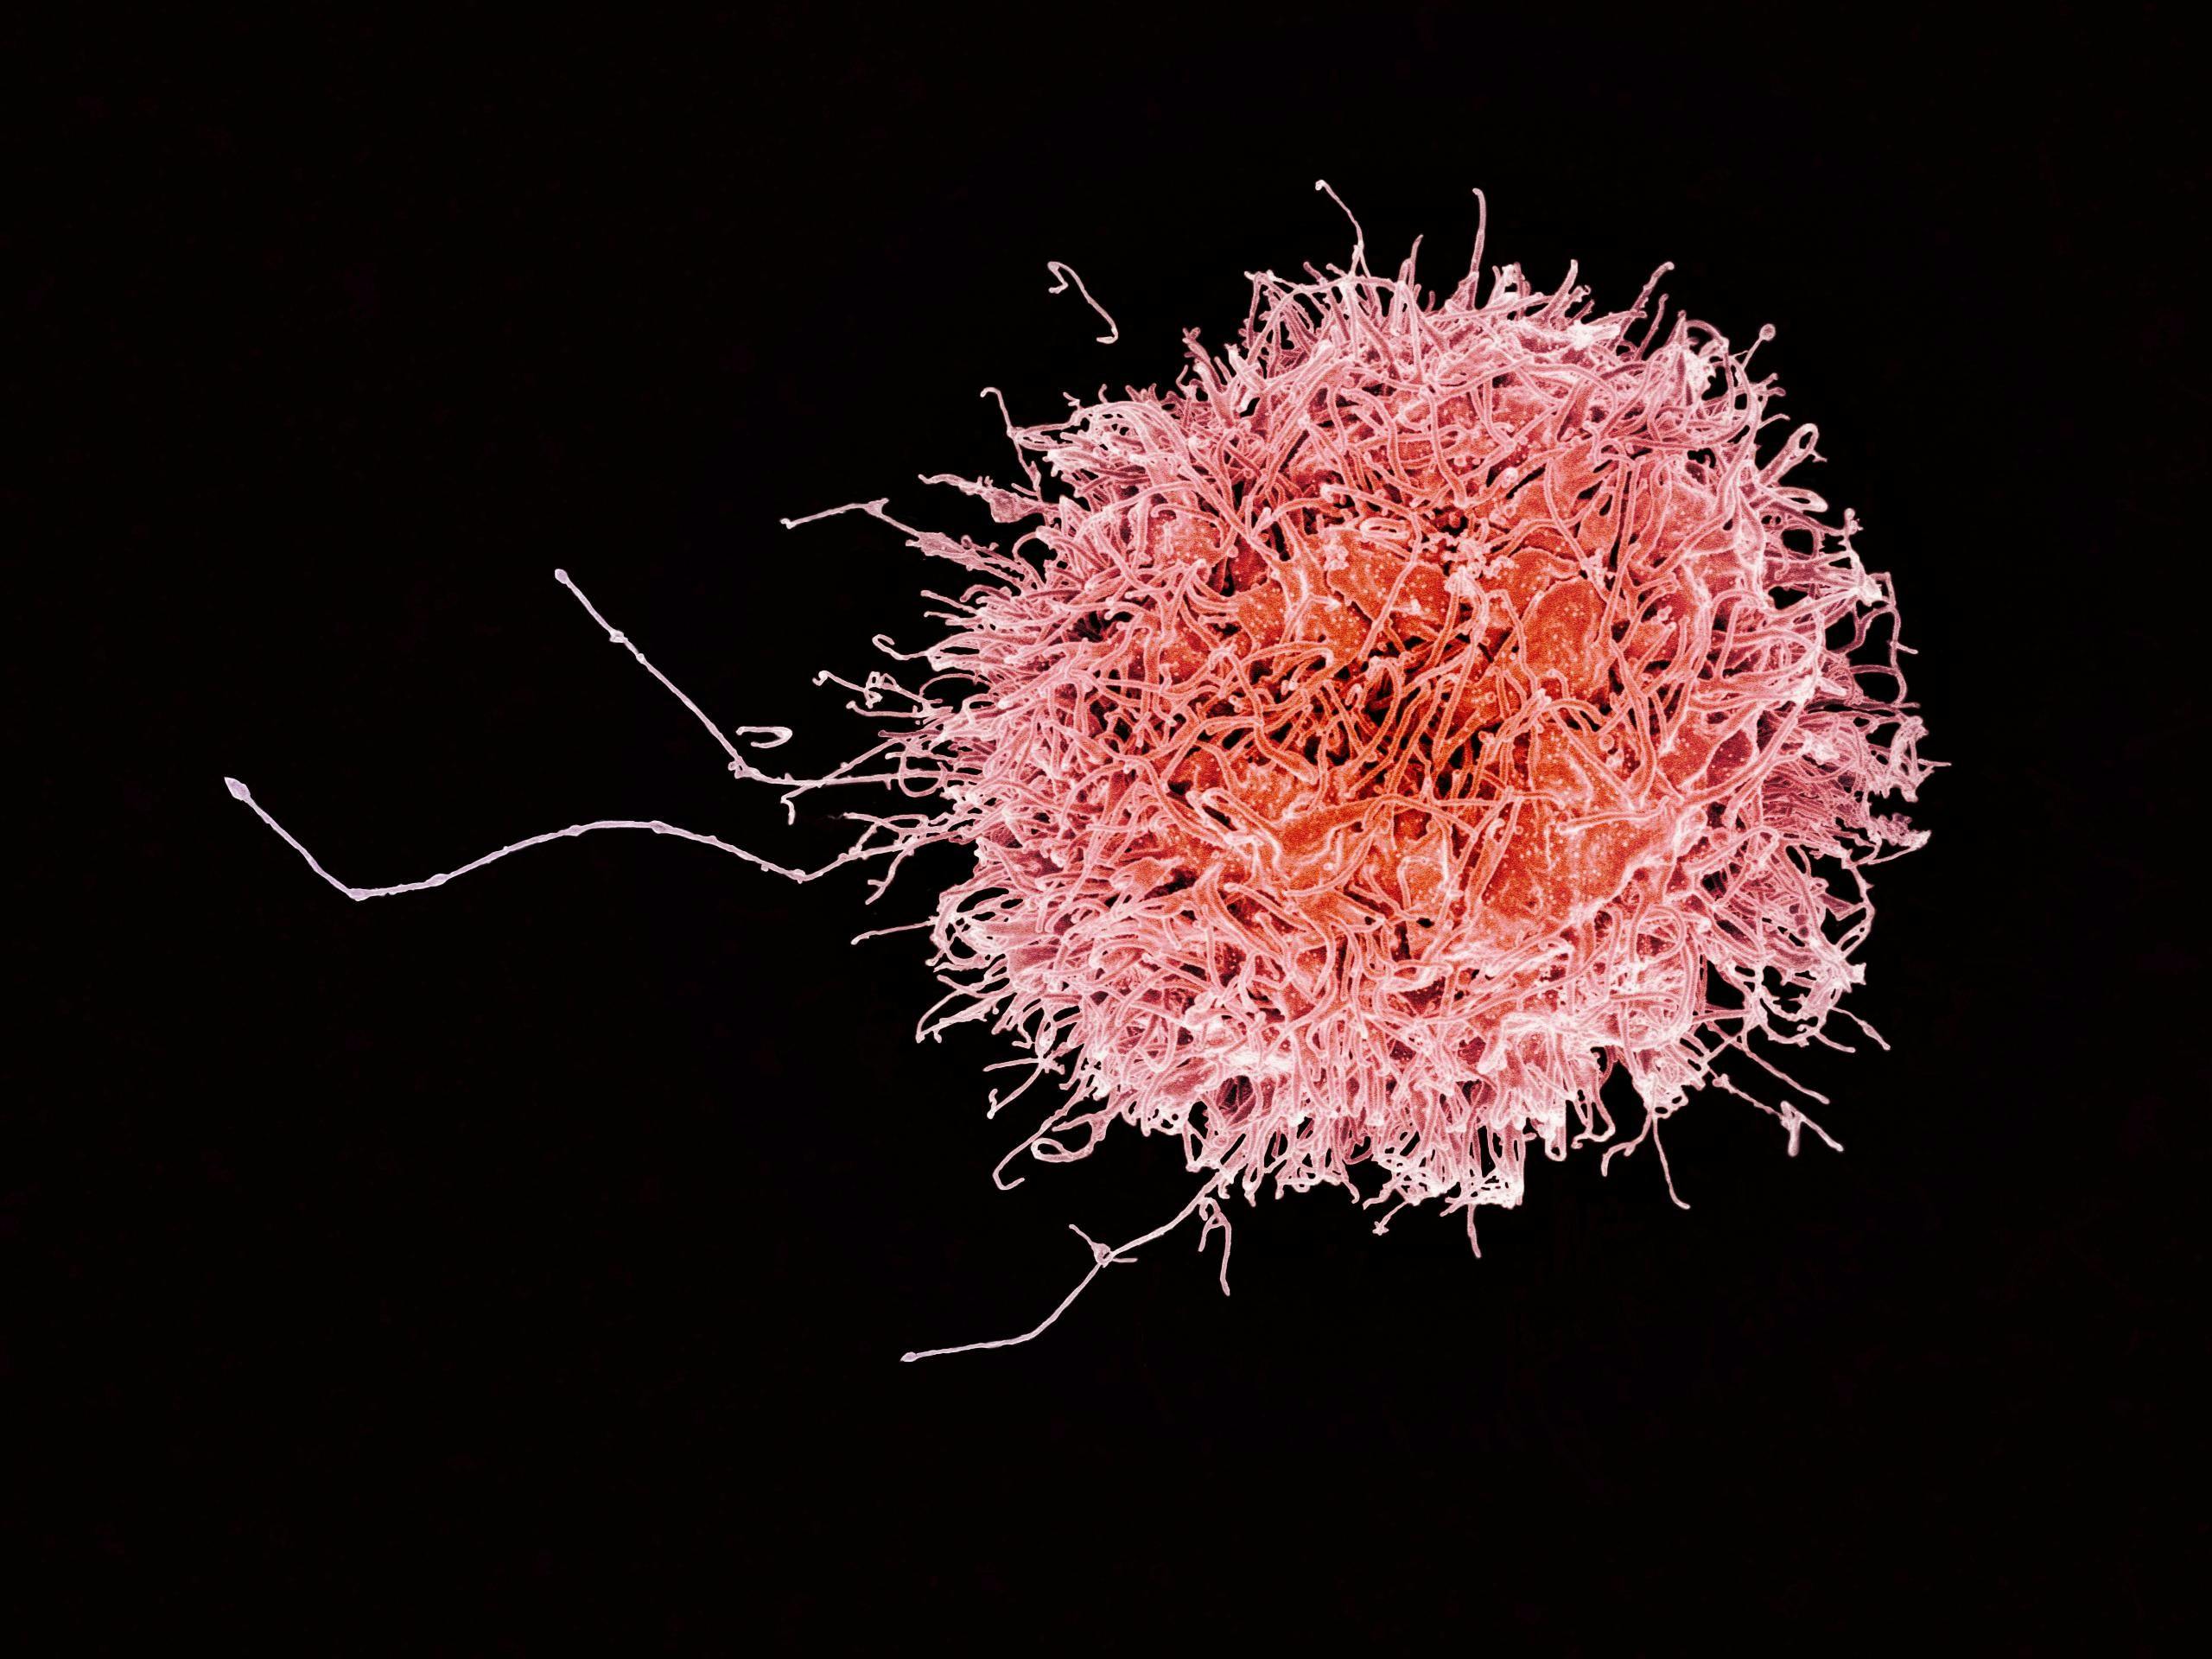 Image of a human natural killer cell